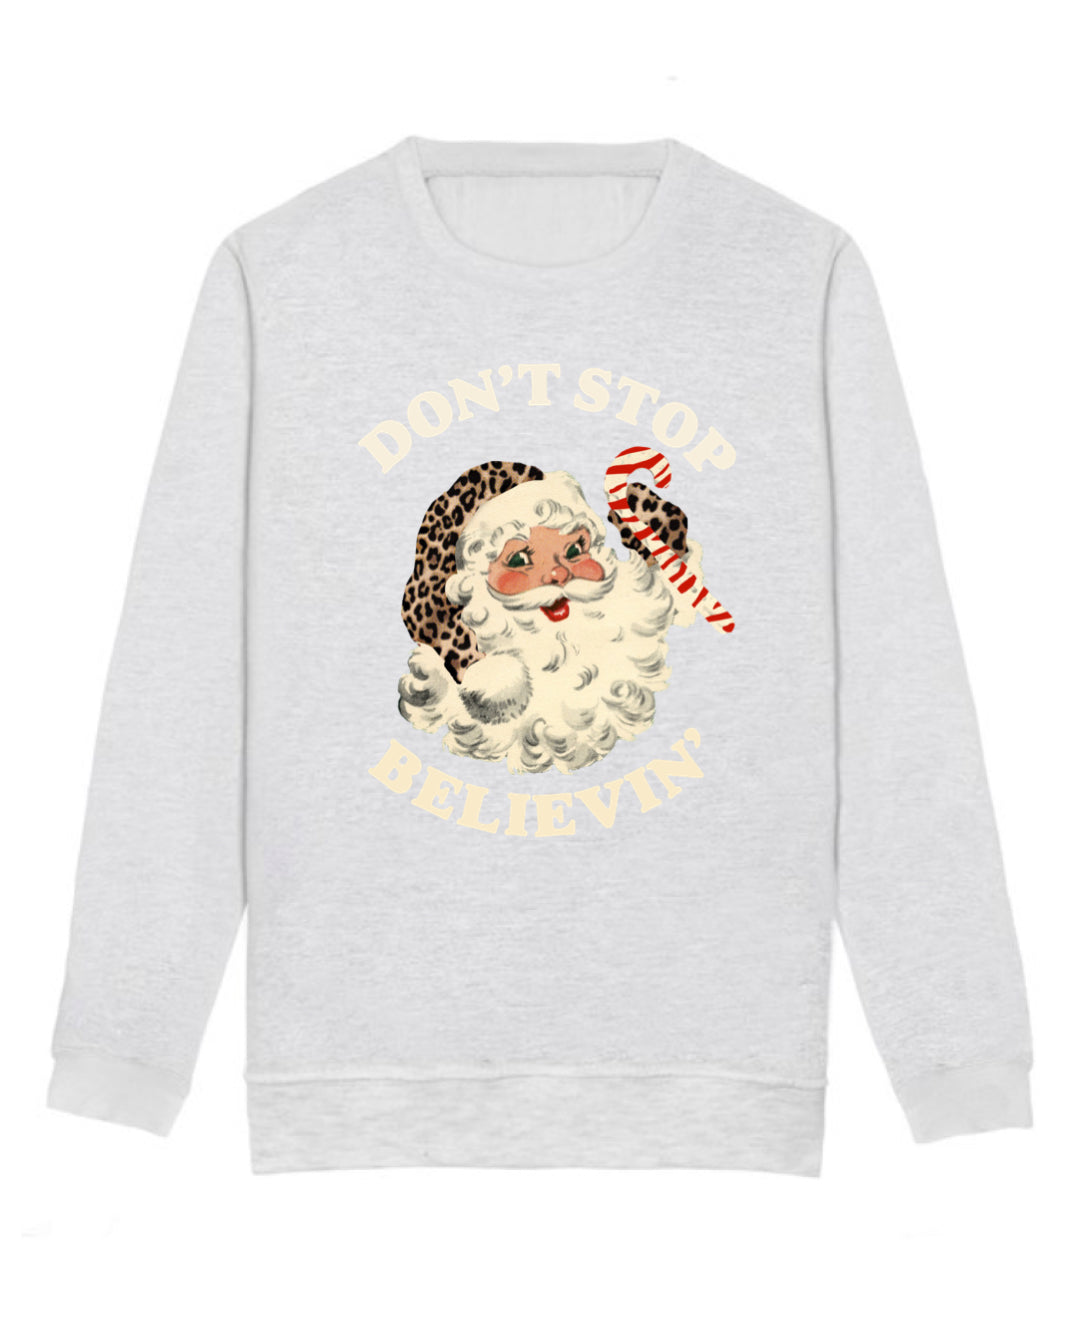 Adults GREY Don’t Stop Believin’ Sweatshirt